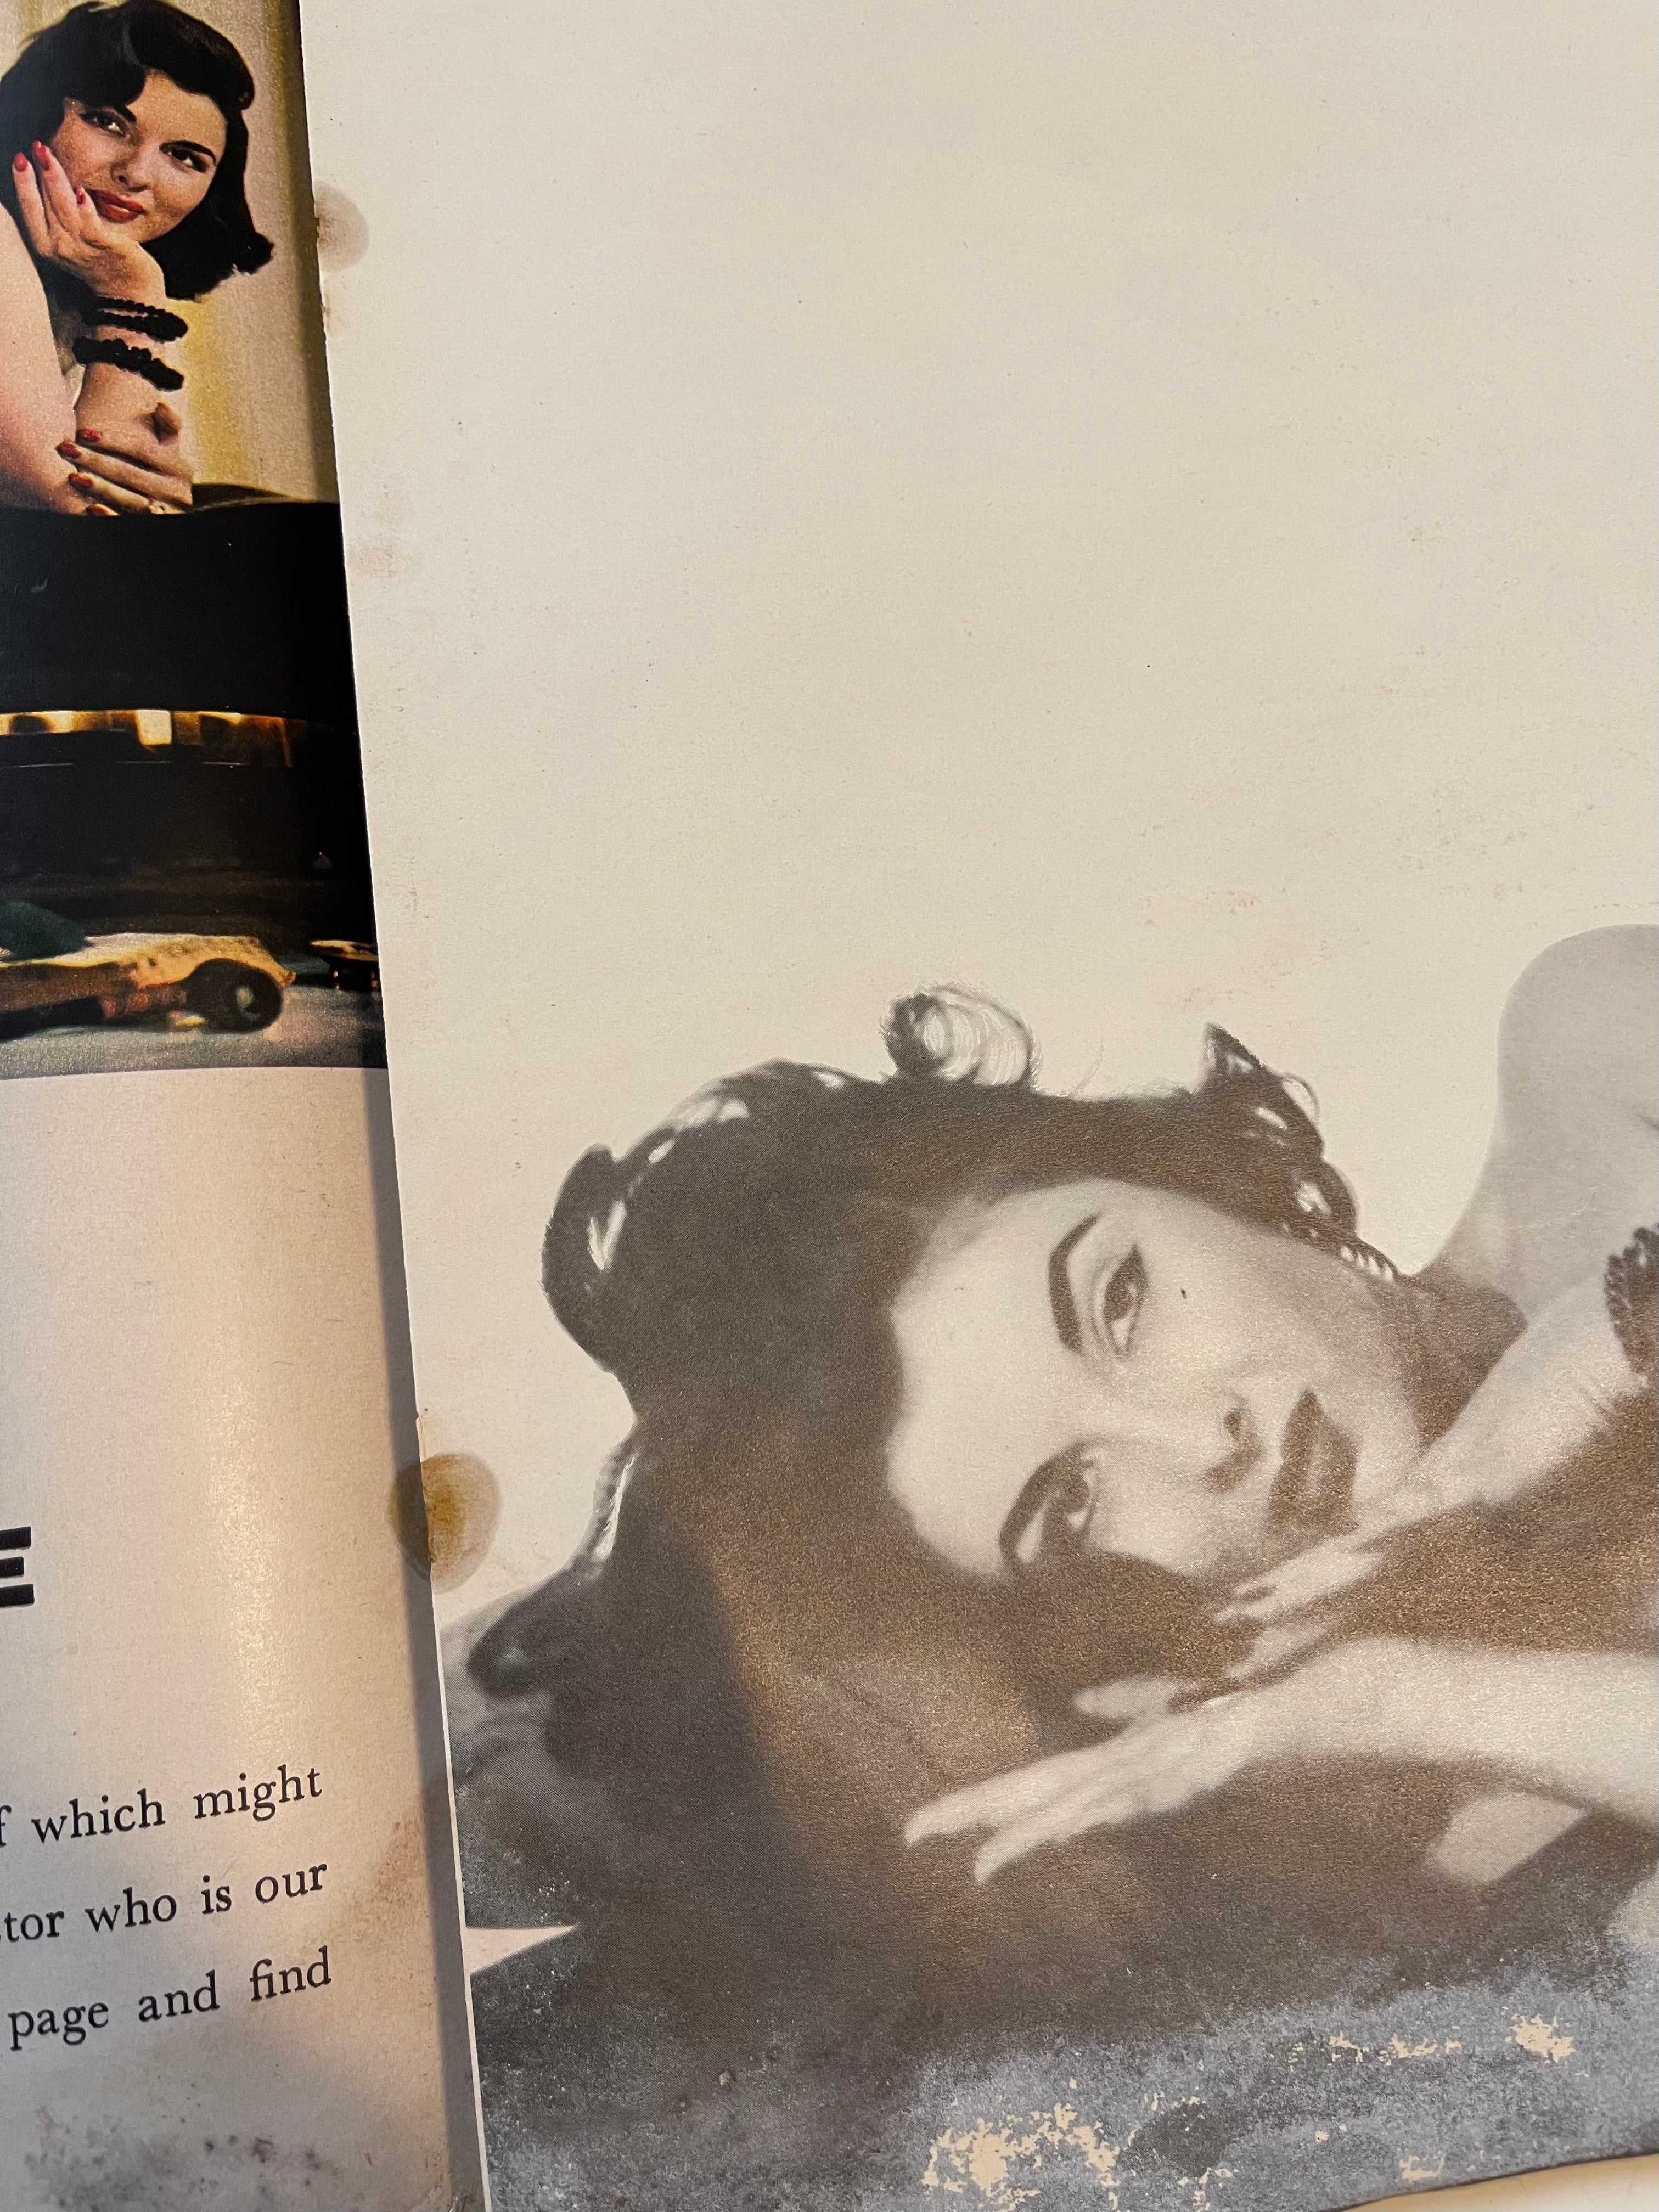 Playboy September with Marilyn Munroe 1955